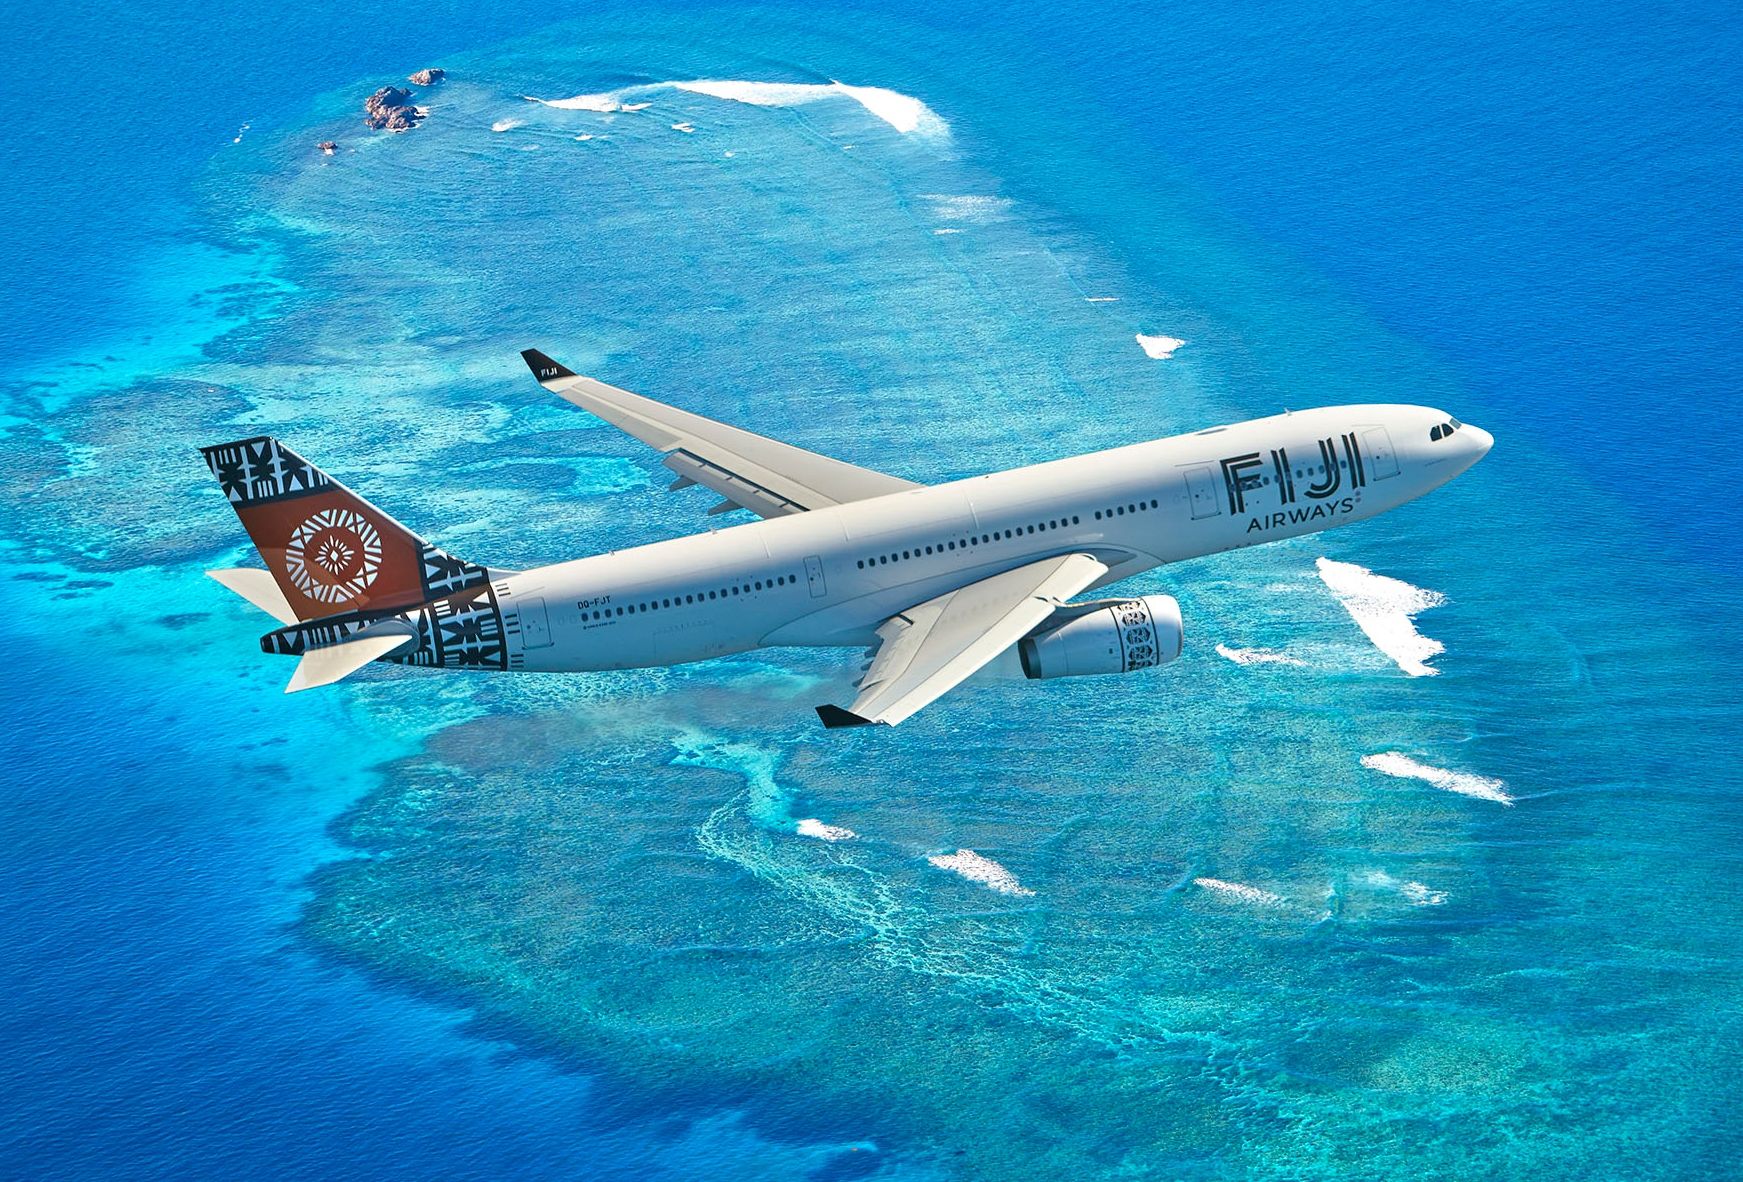 Fiji Airways is adding more flights to Samoa and Tonga